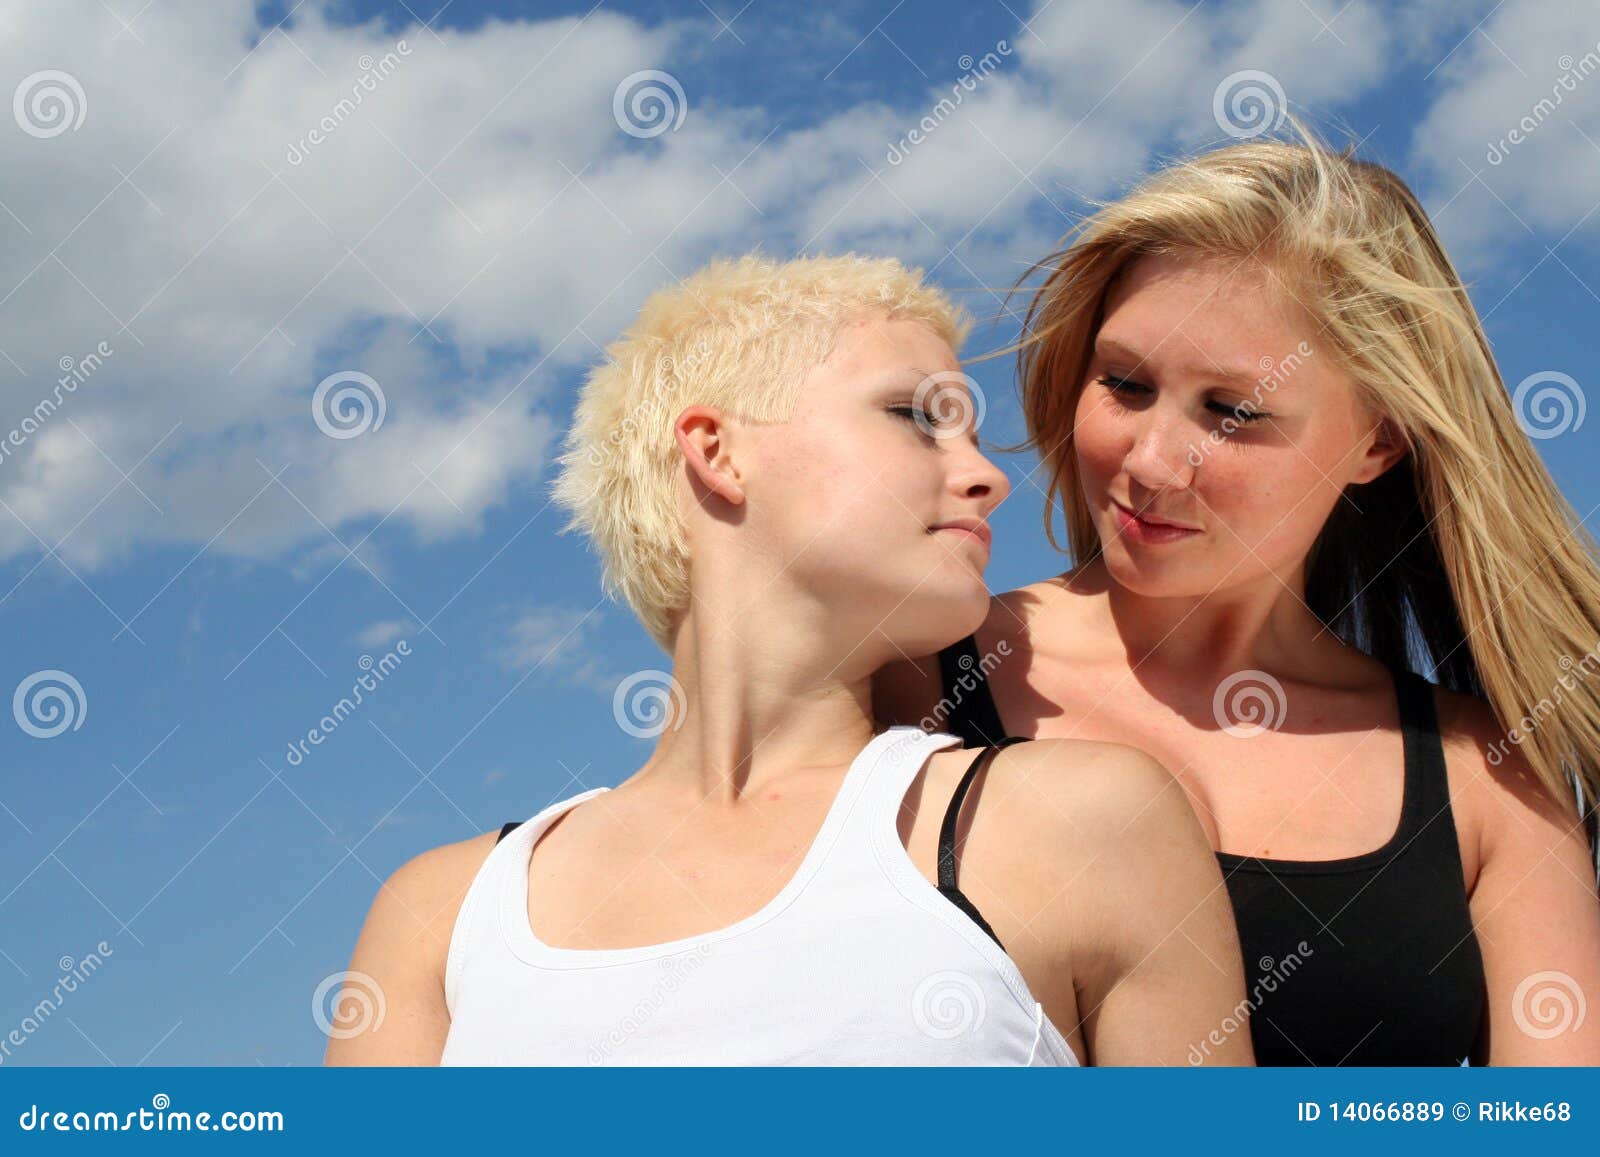 two women flirting